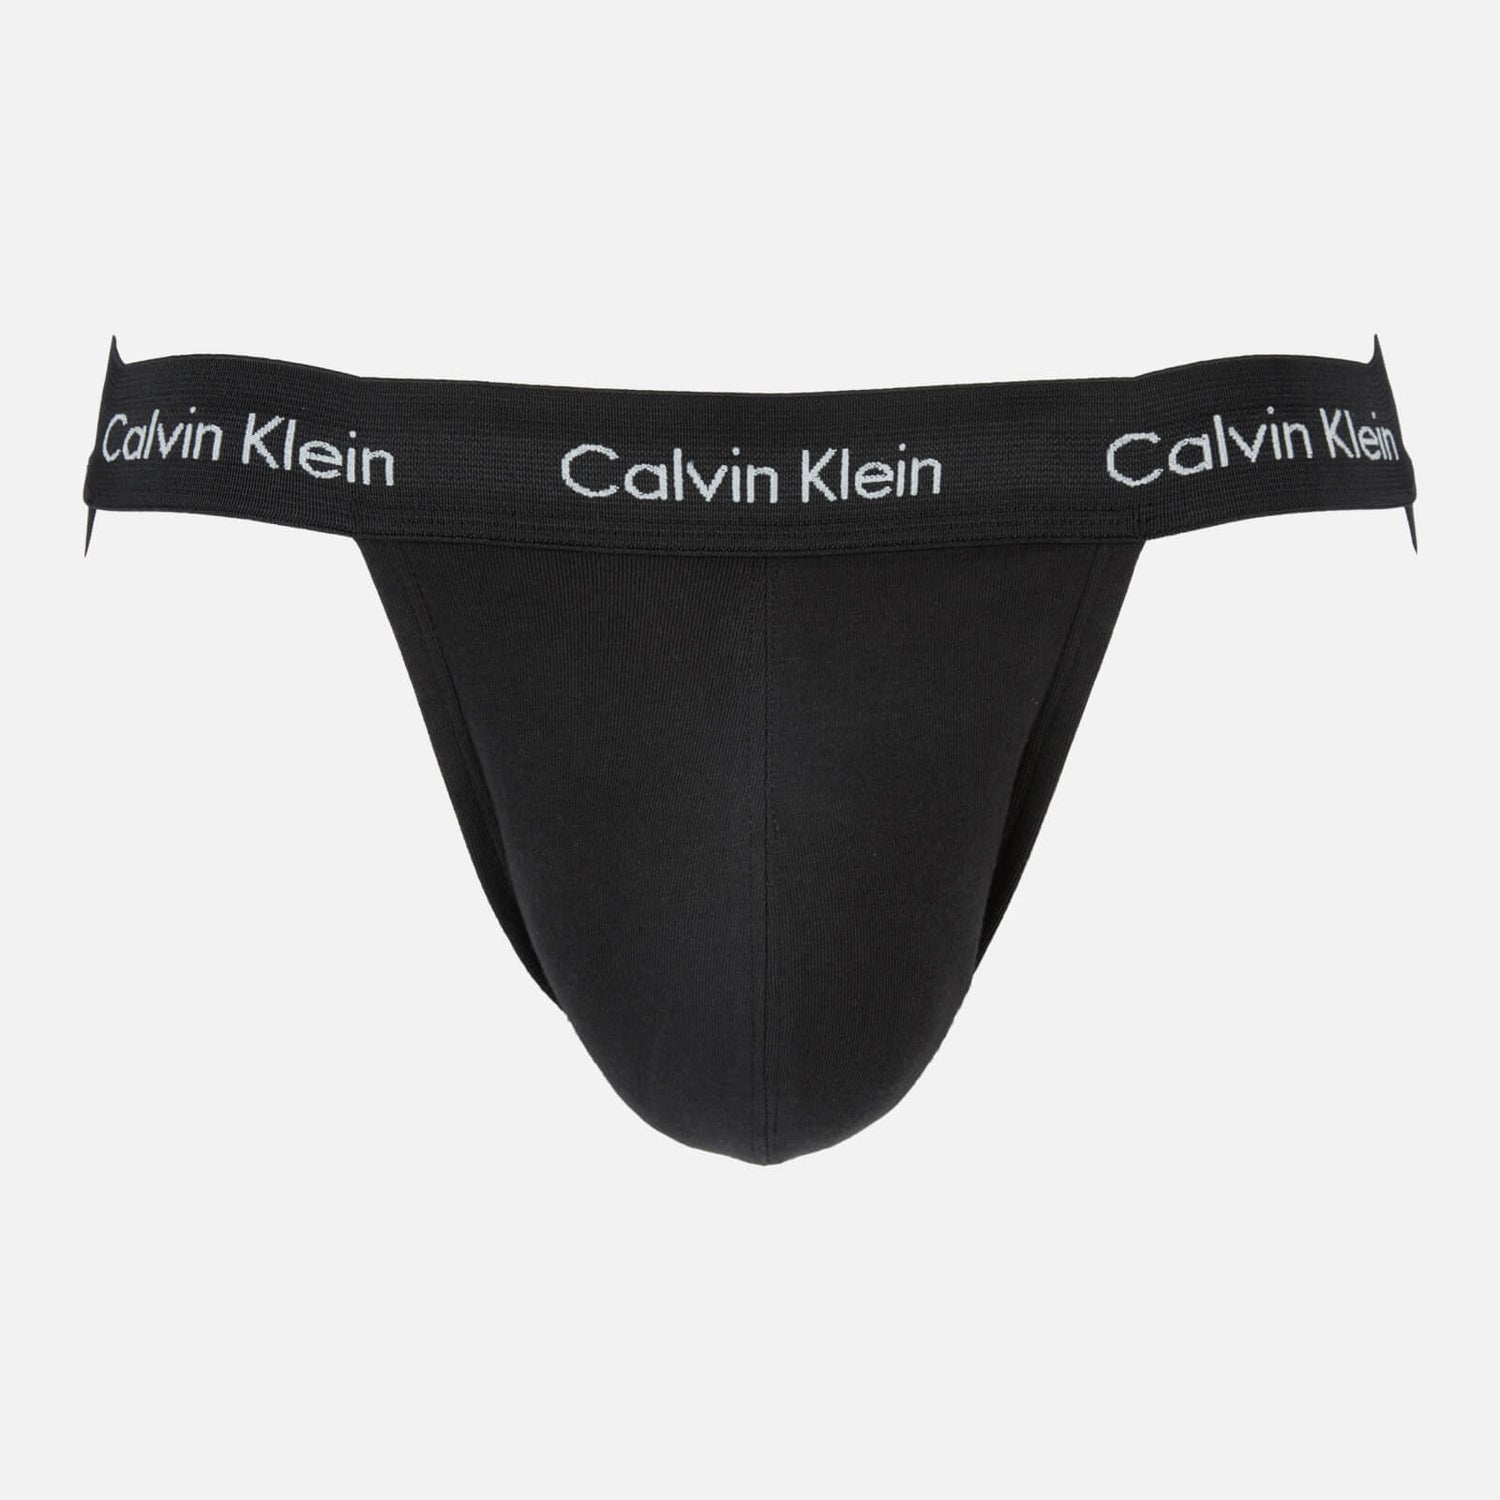 Calvin Klein Men's 2-Pack Jock Strap - Black - M